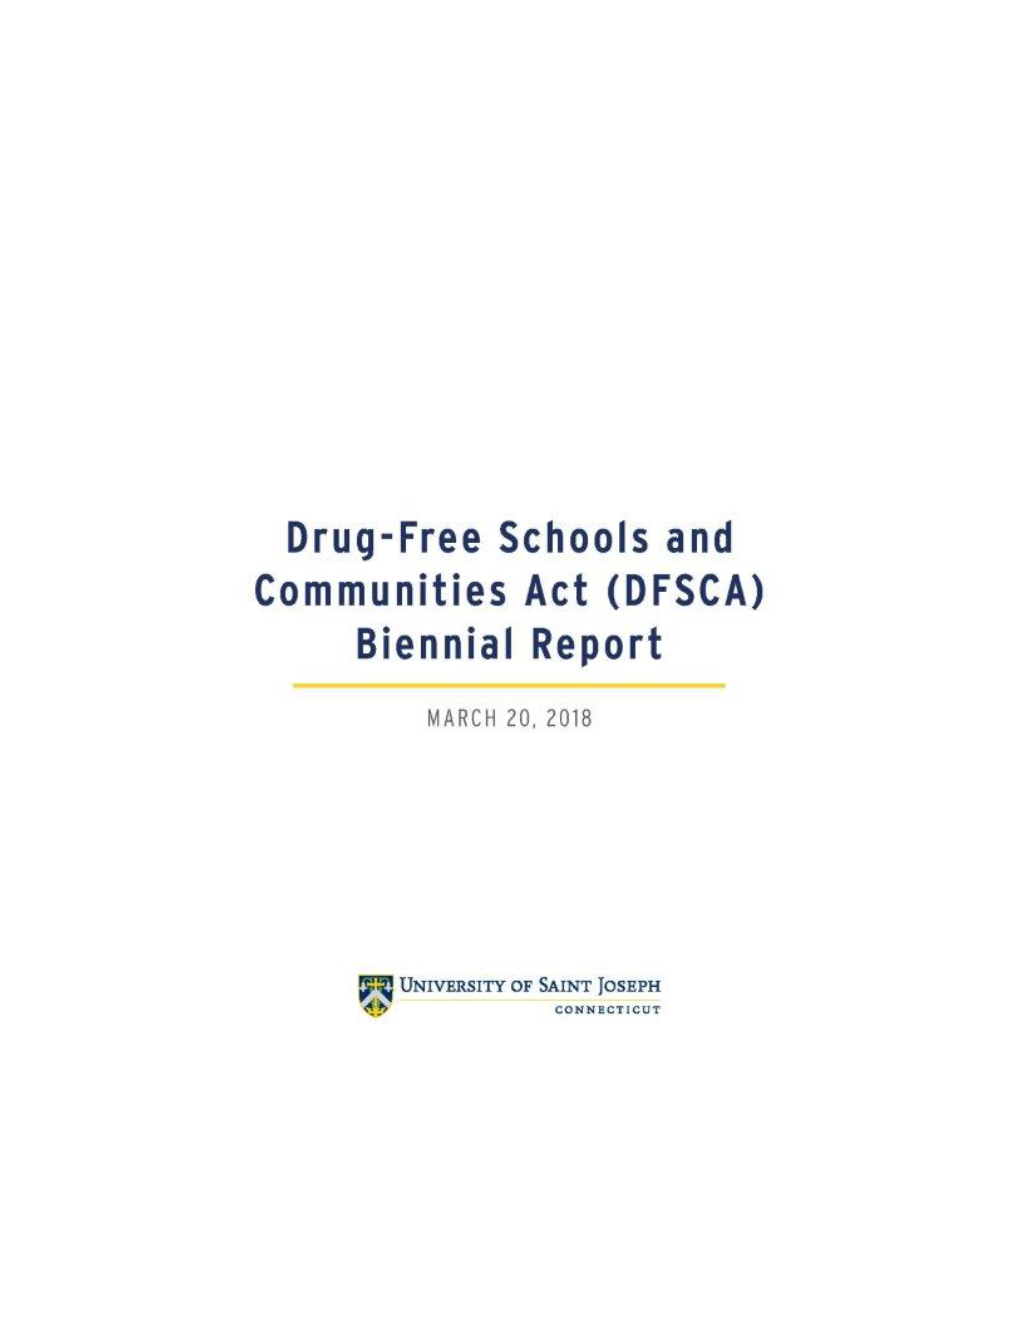 Drug-Free Schools and Communities ACT Biennial Report